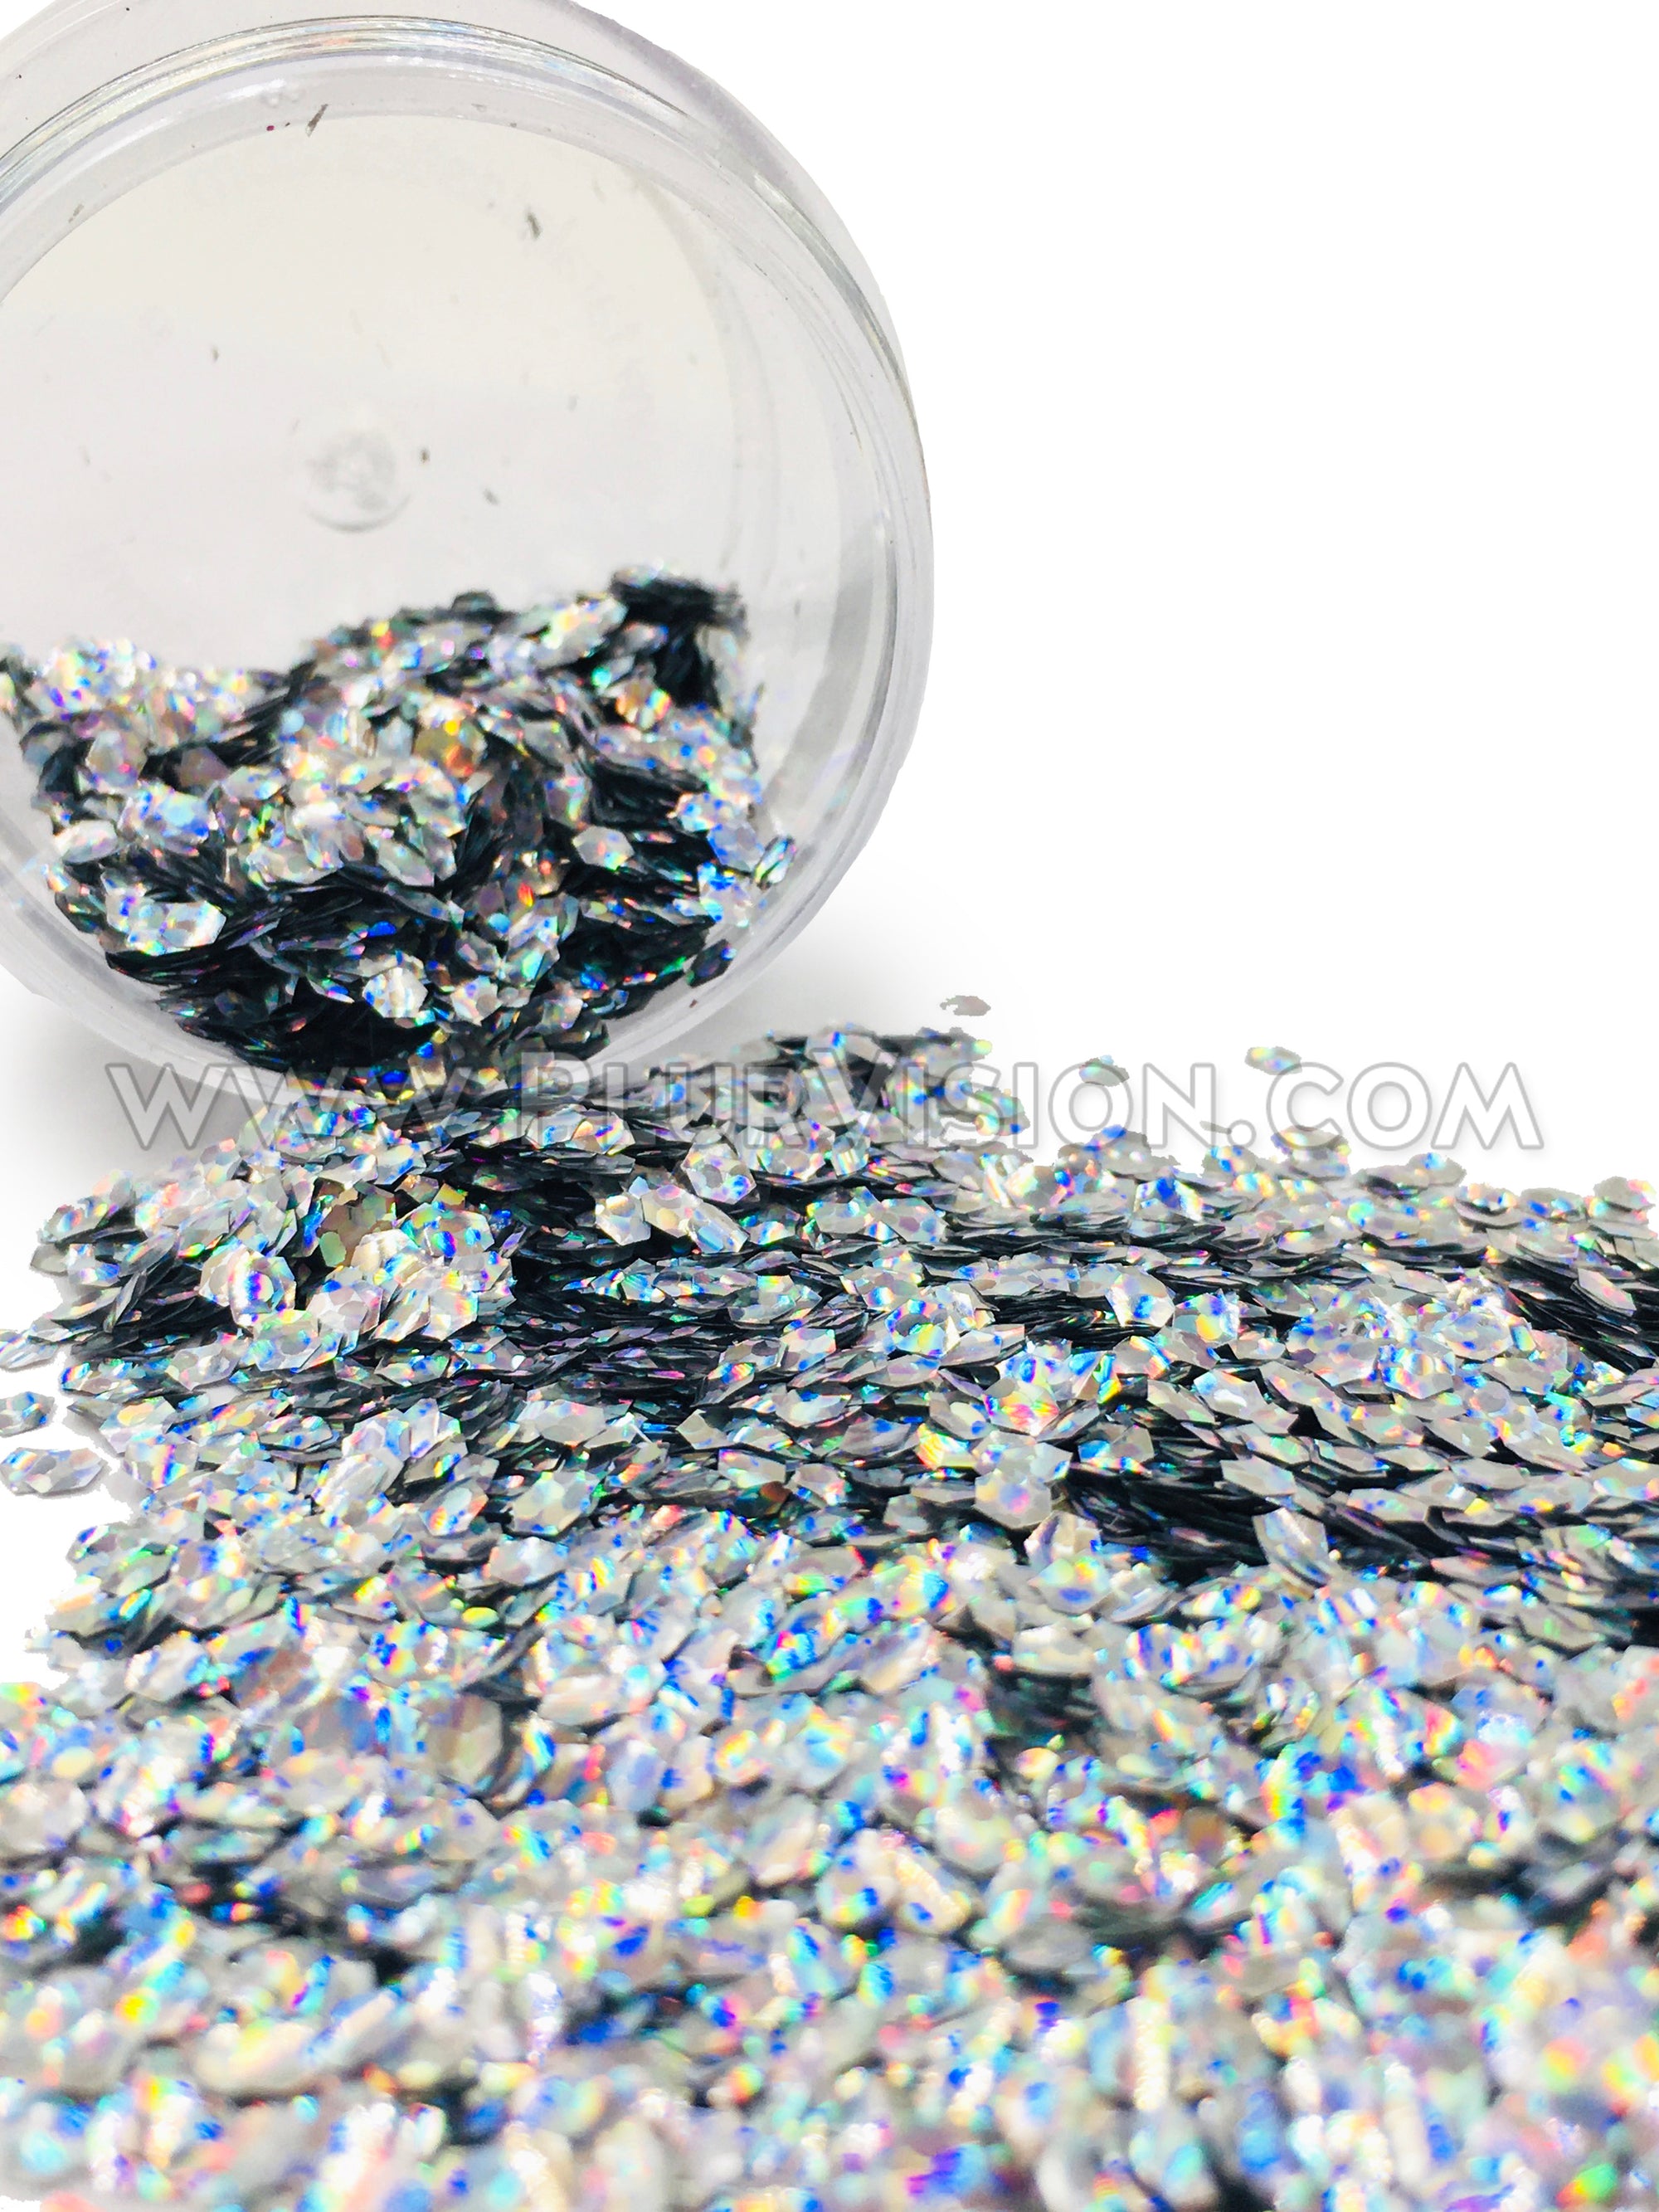 ✨Moonlit Silver Large Cut Biodegradable Glitter! ✨